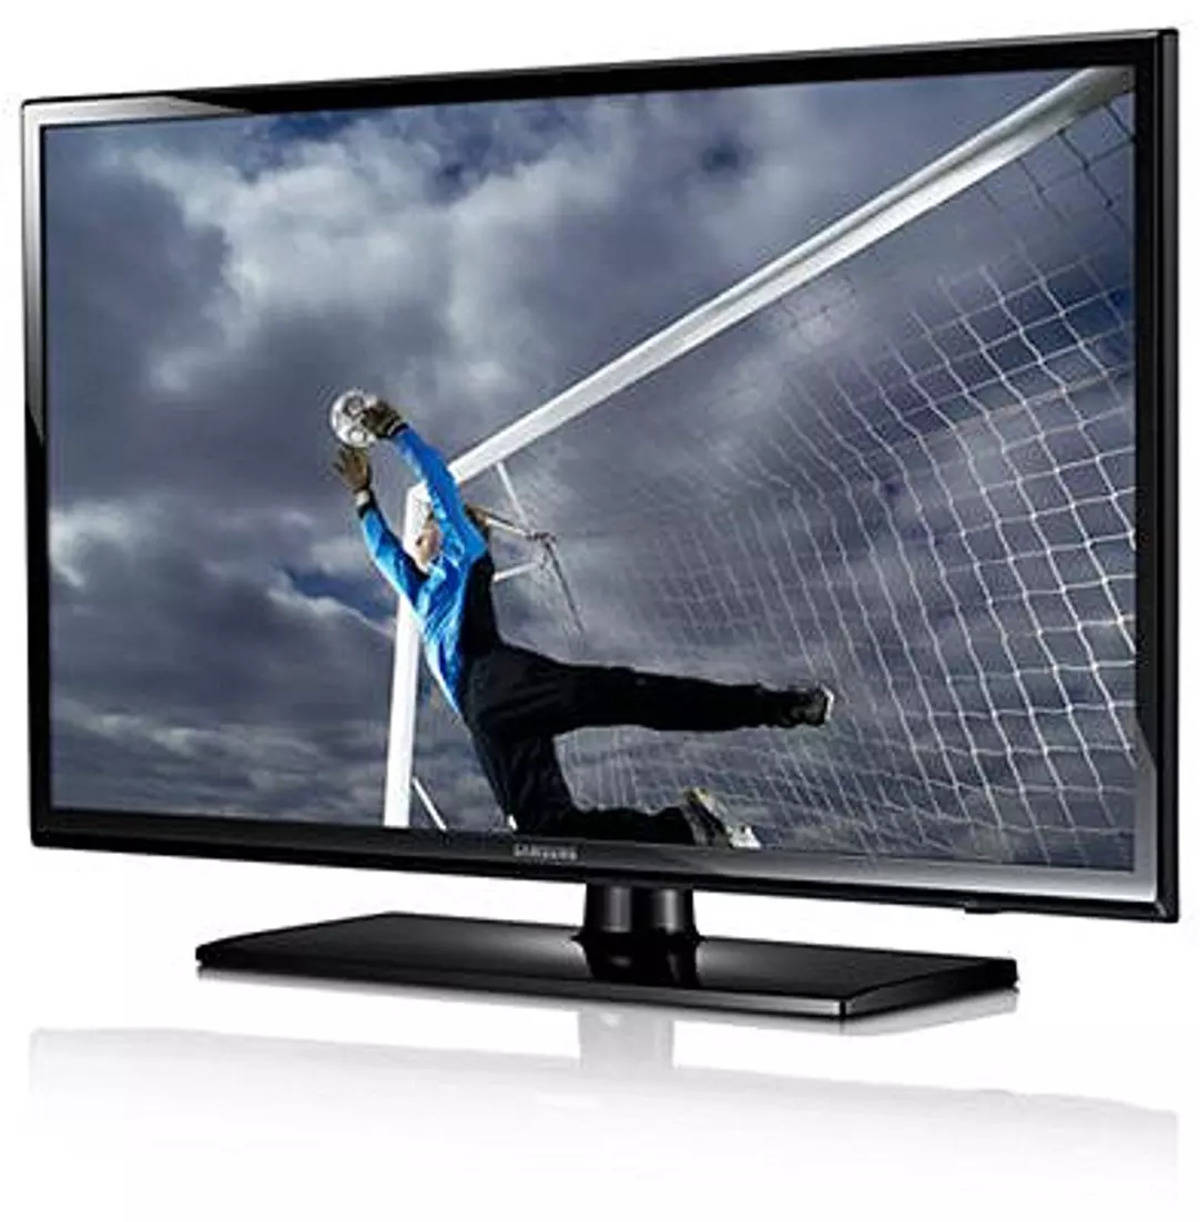 Samsung Orsay Tv